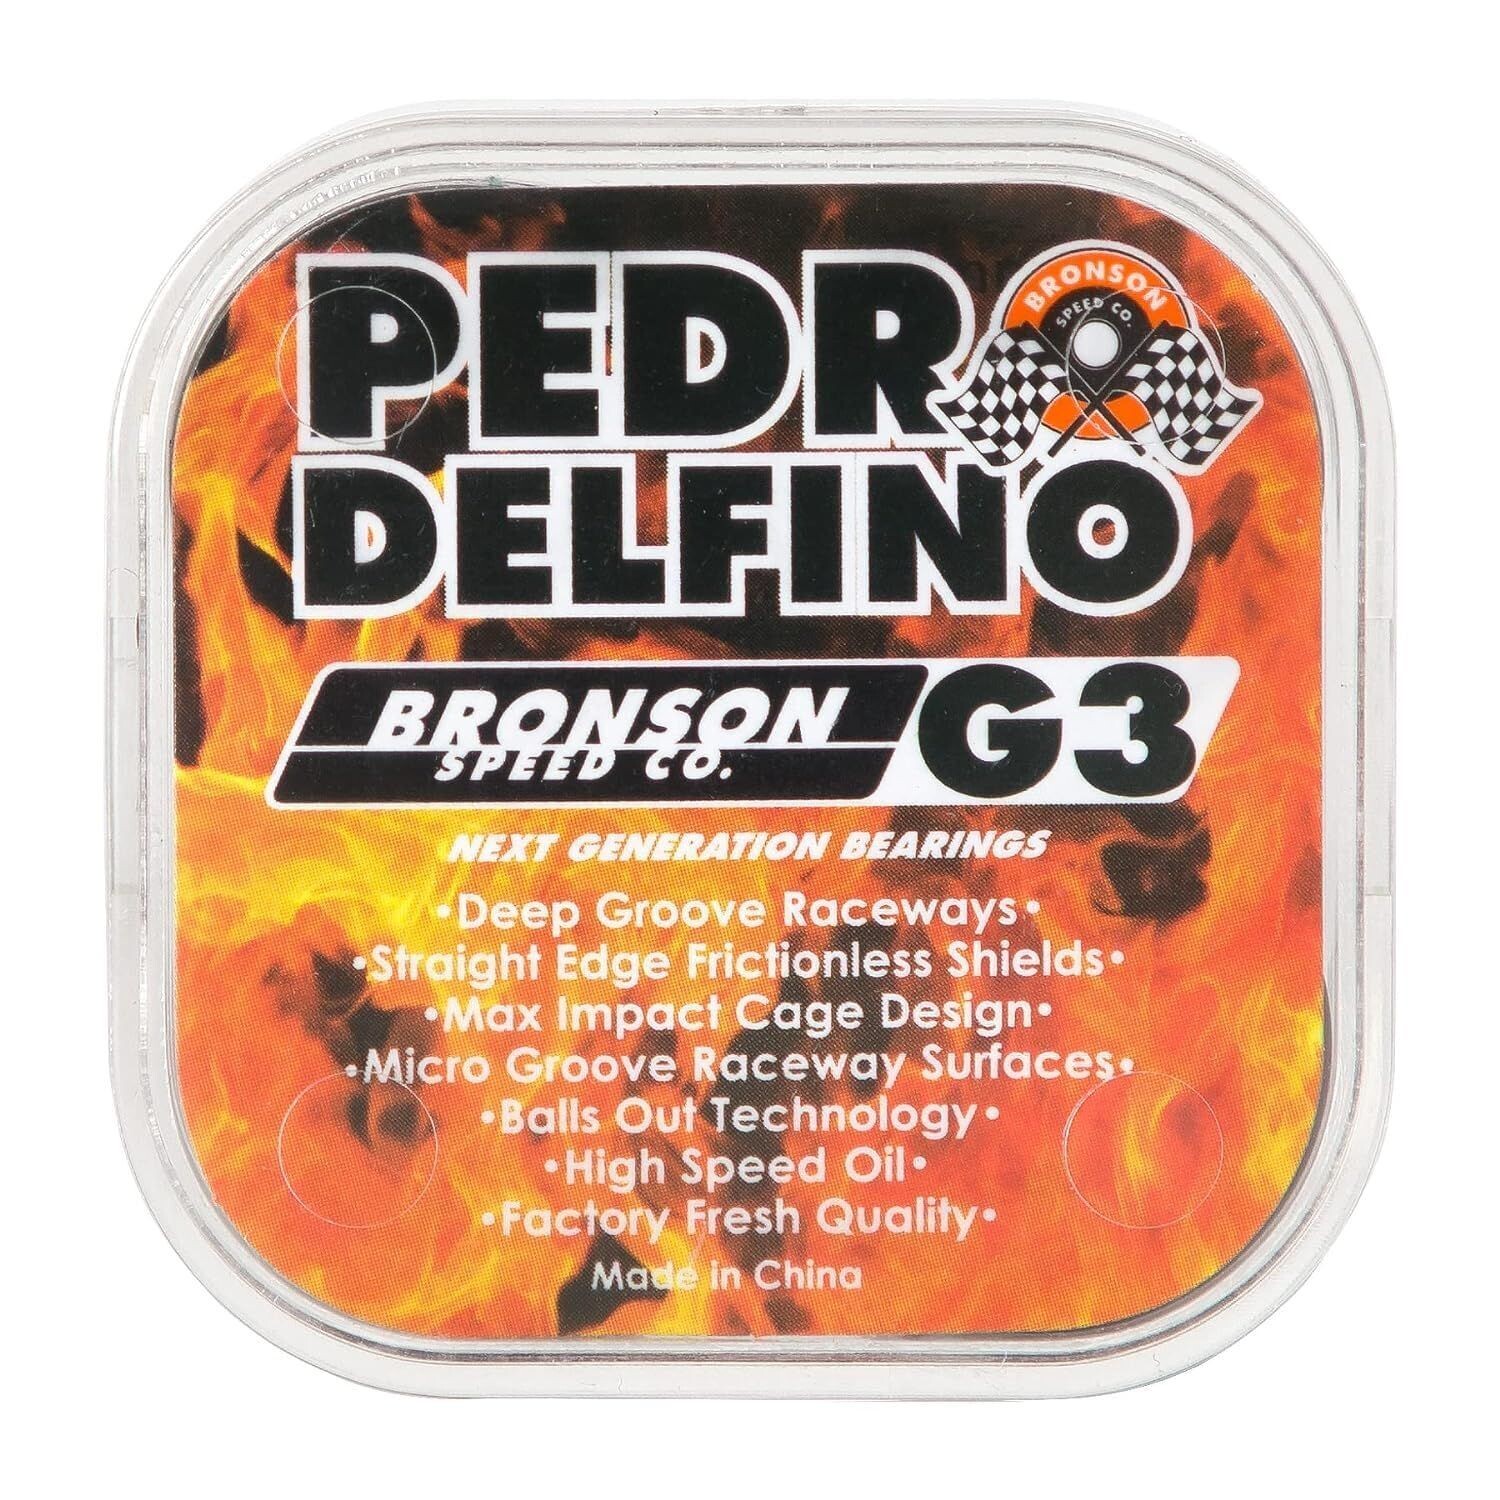 Bronson G3 Pedro Delfino Pro Bearings